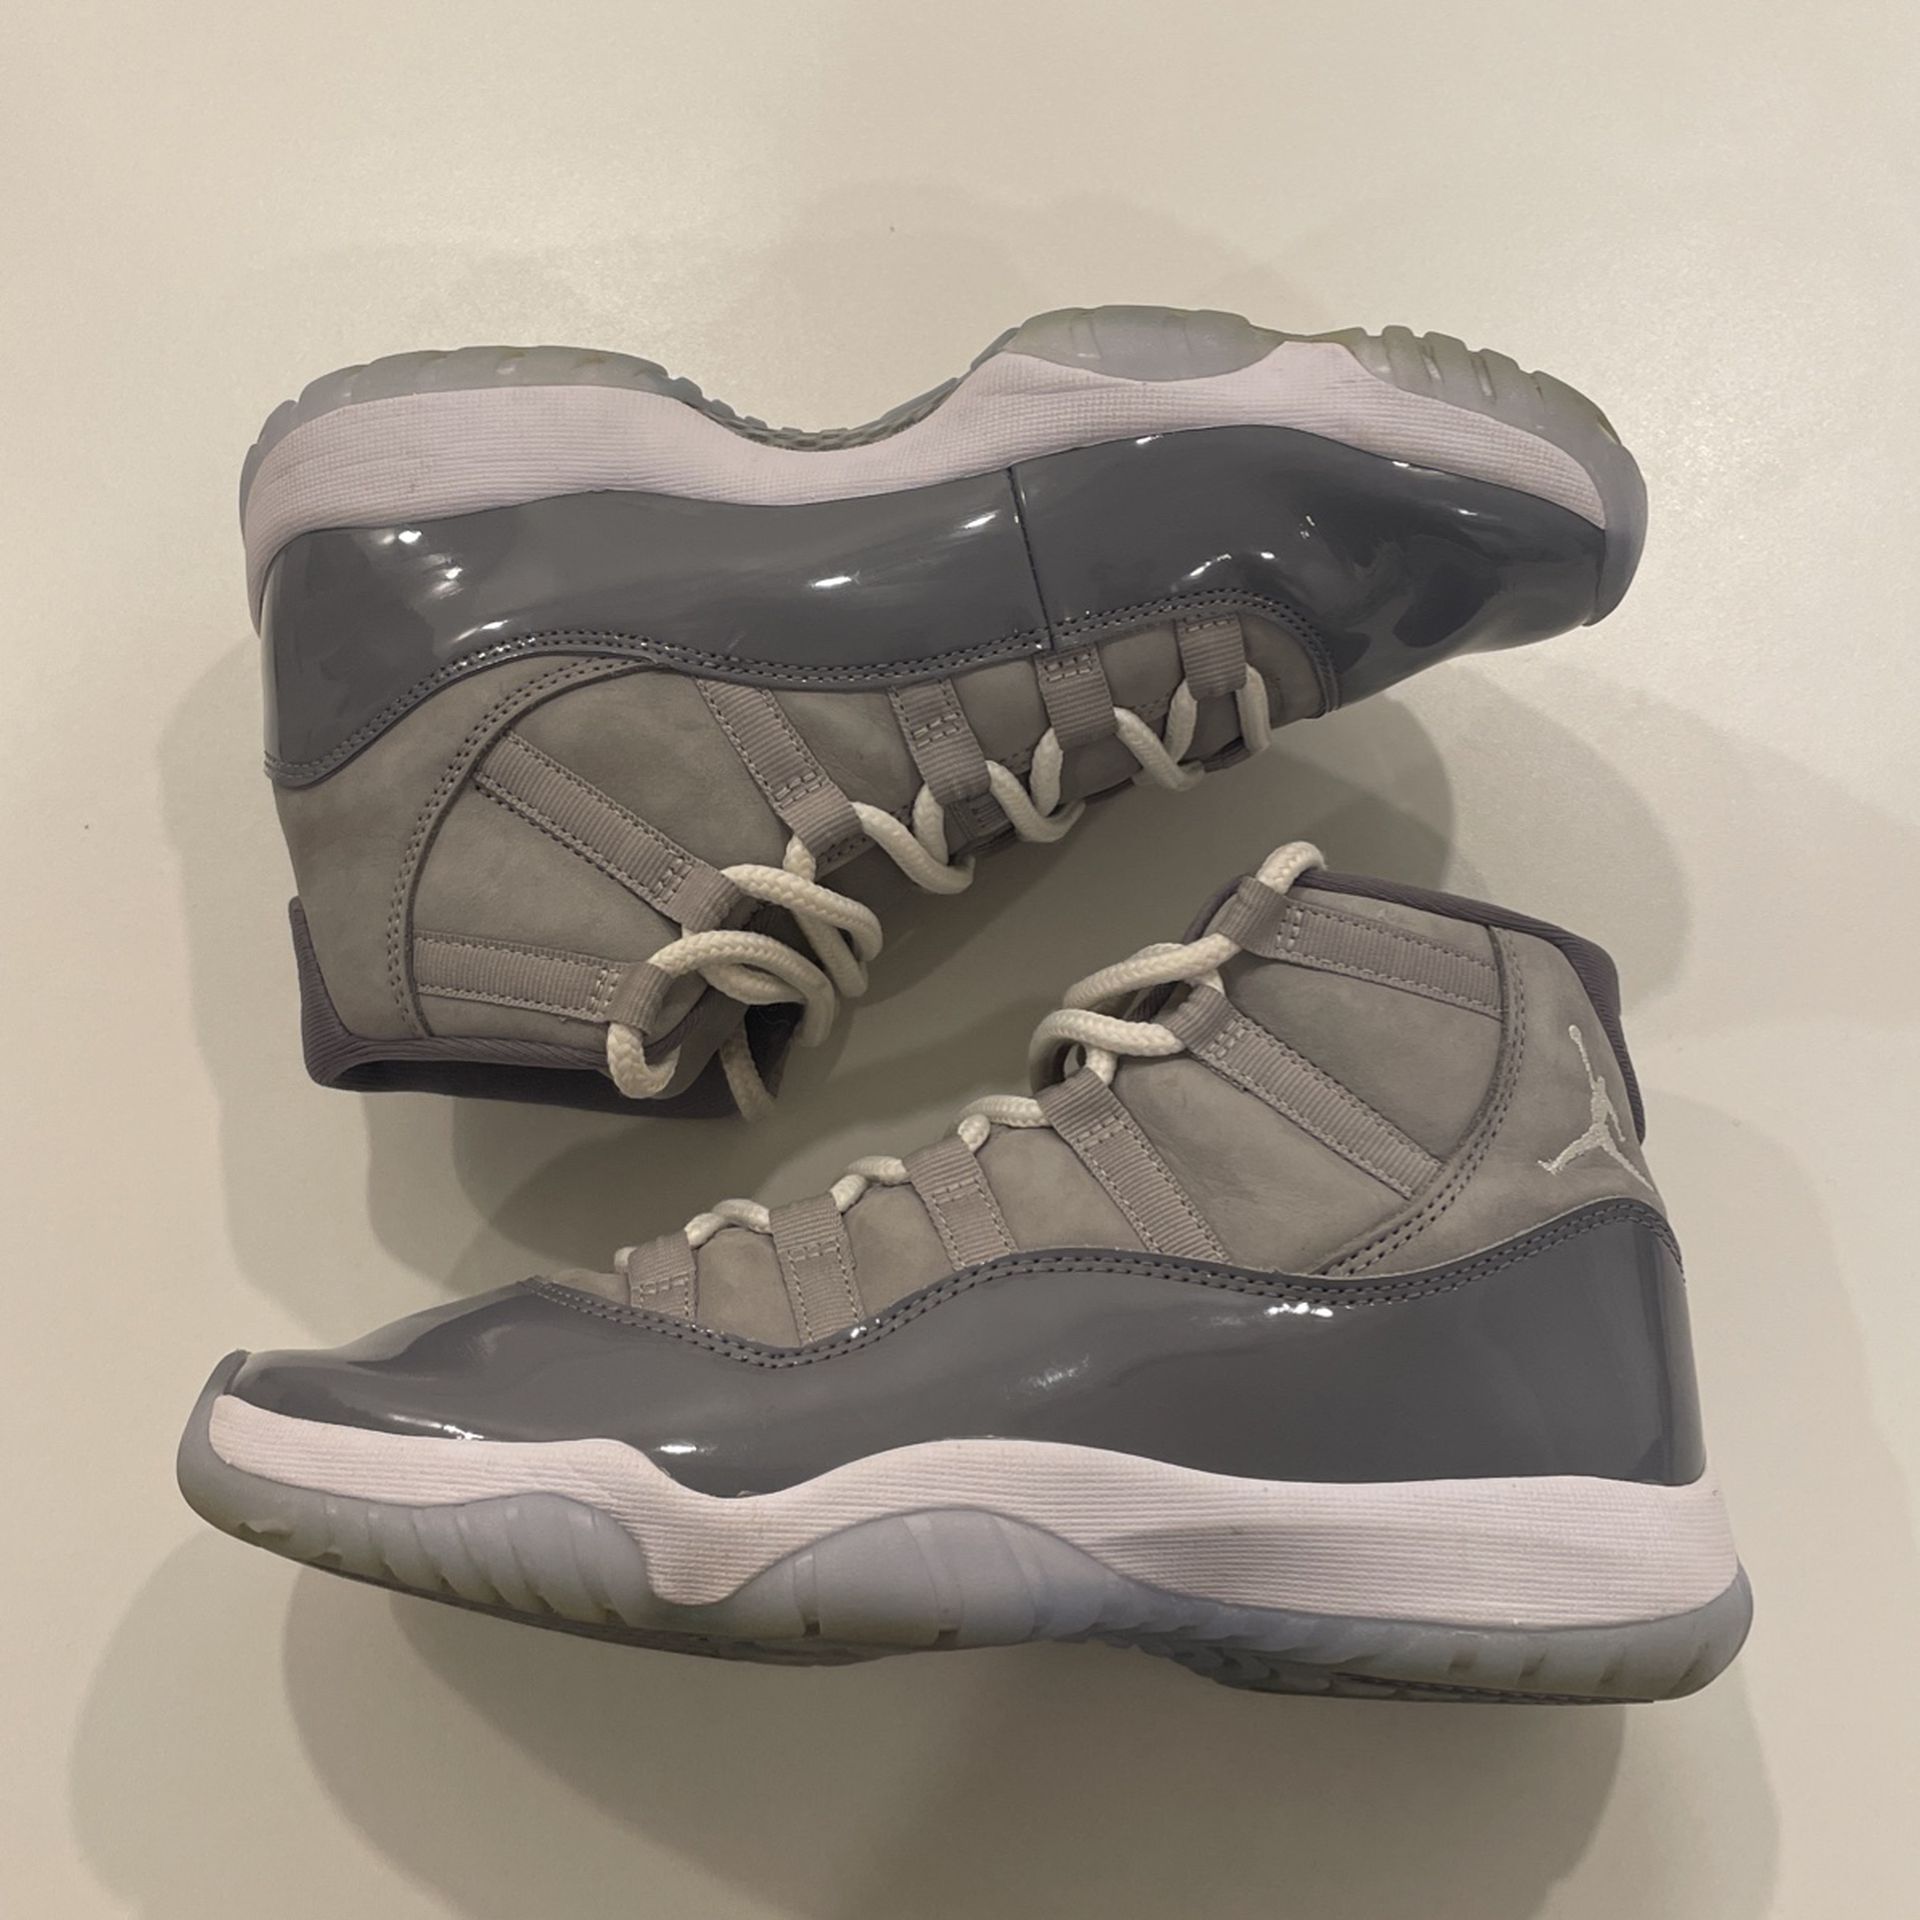 Jordan 11 Cool Grey Size 8